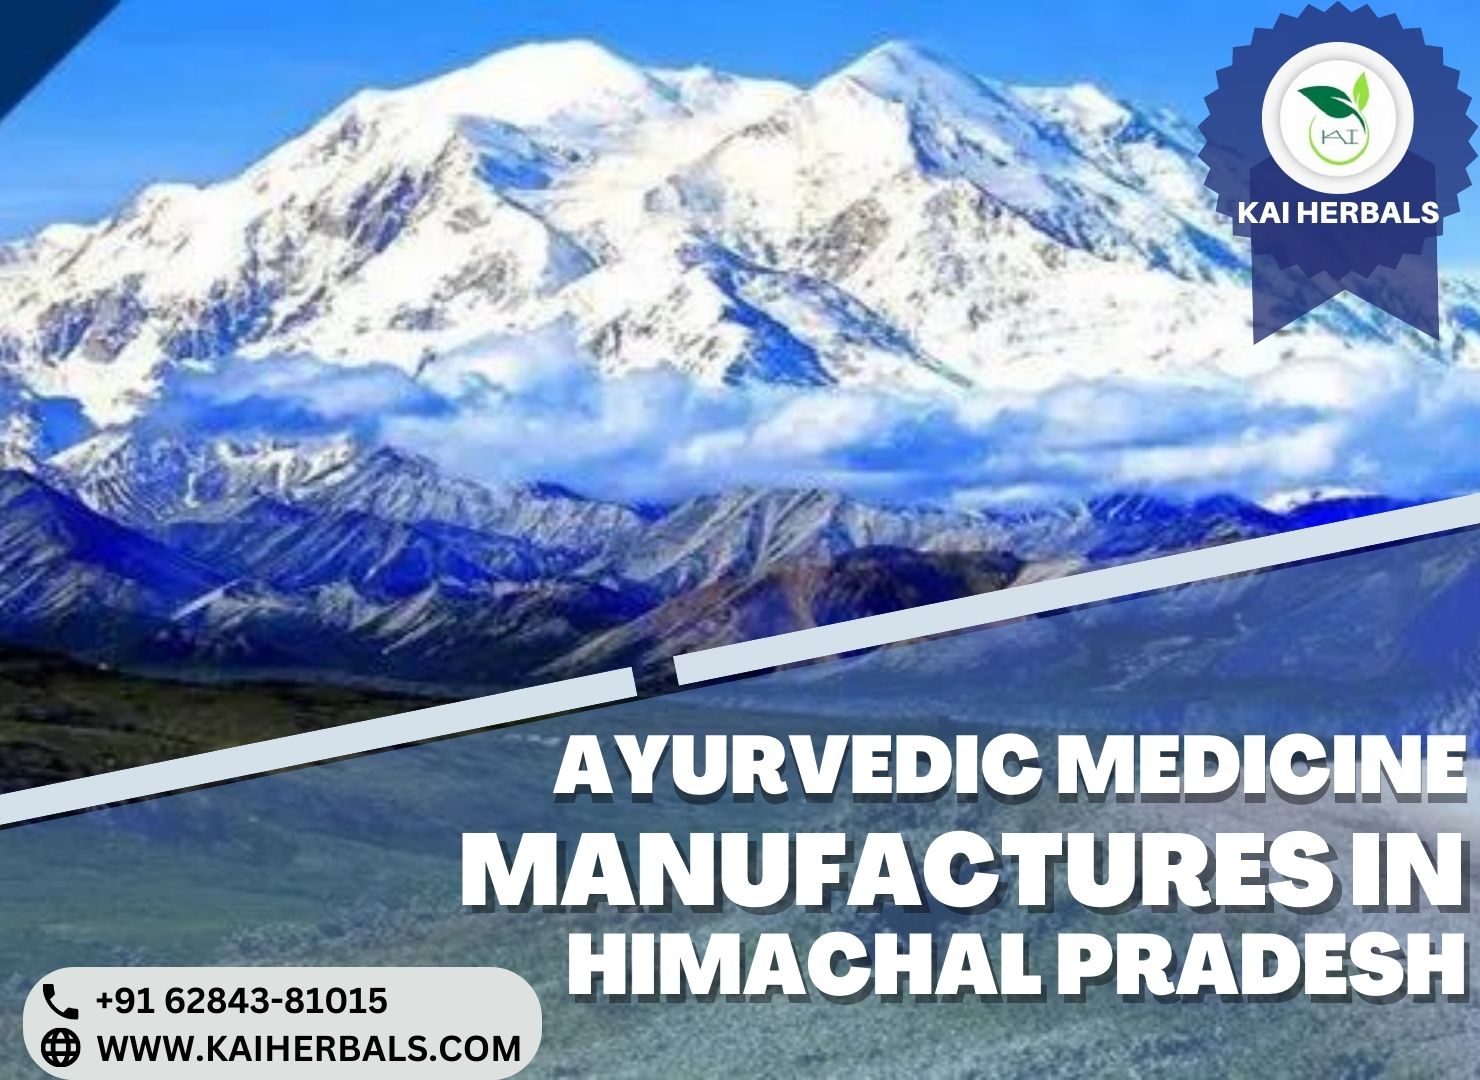 Ayurvedic Medicine Manufactures in Himachal Pradesh